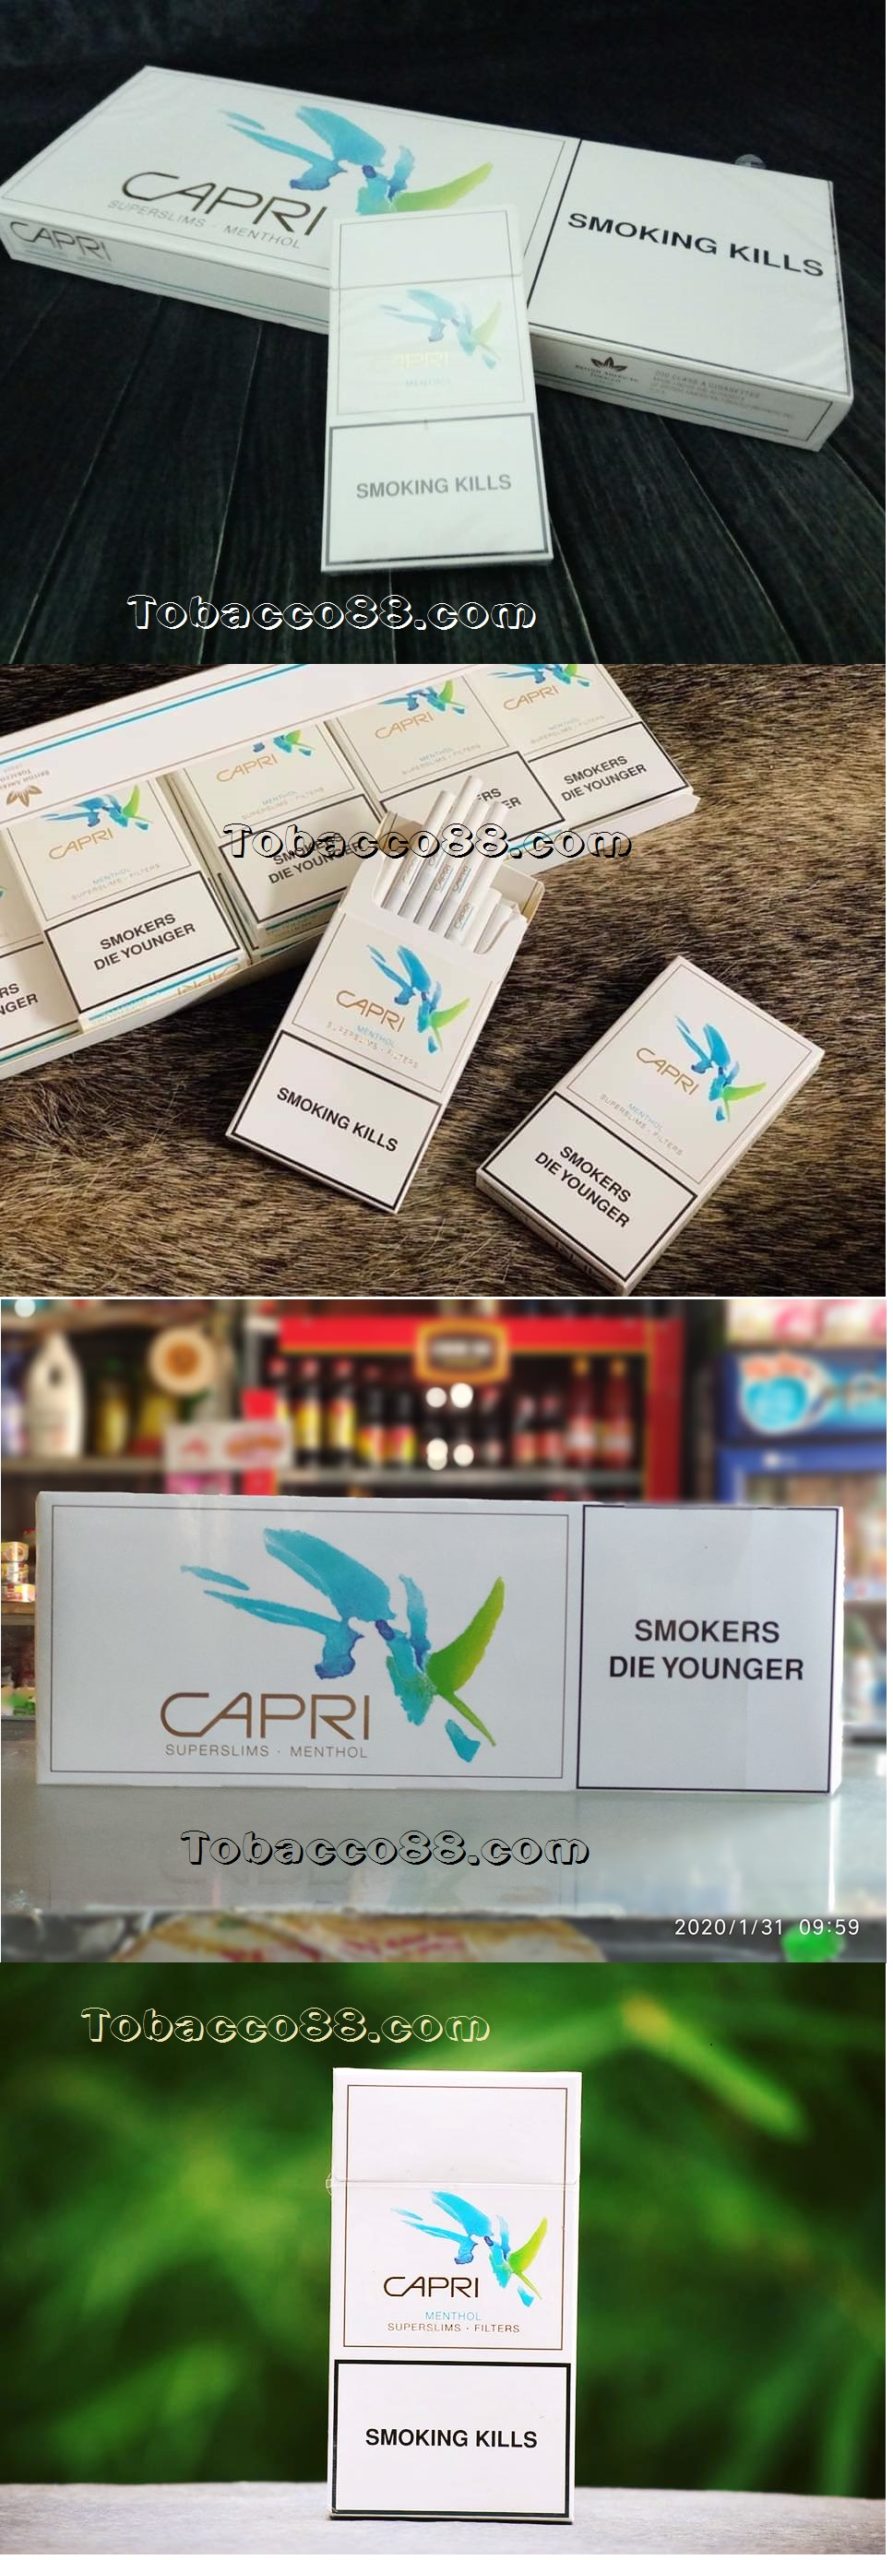 thuốc lá capri menthol